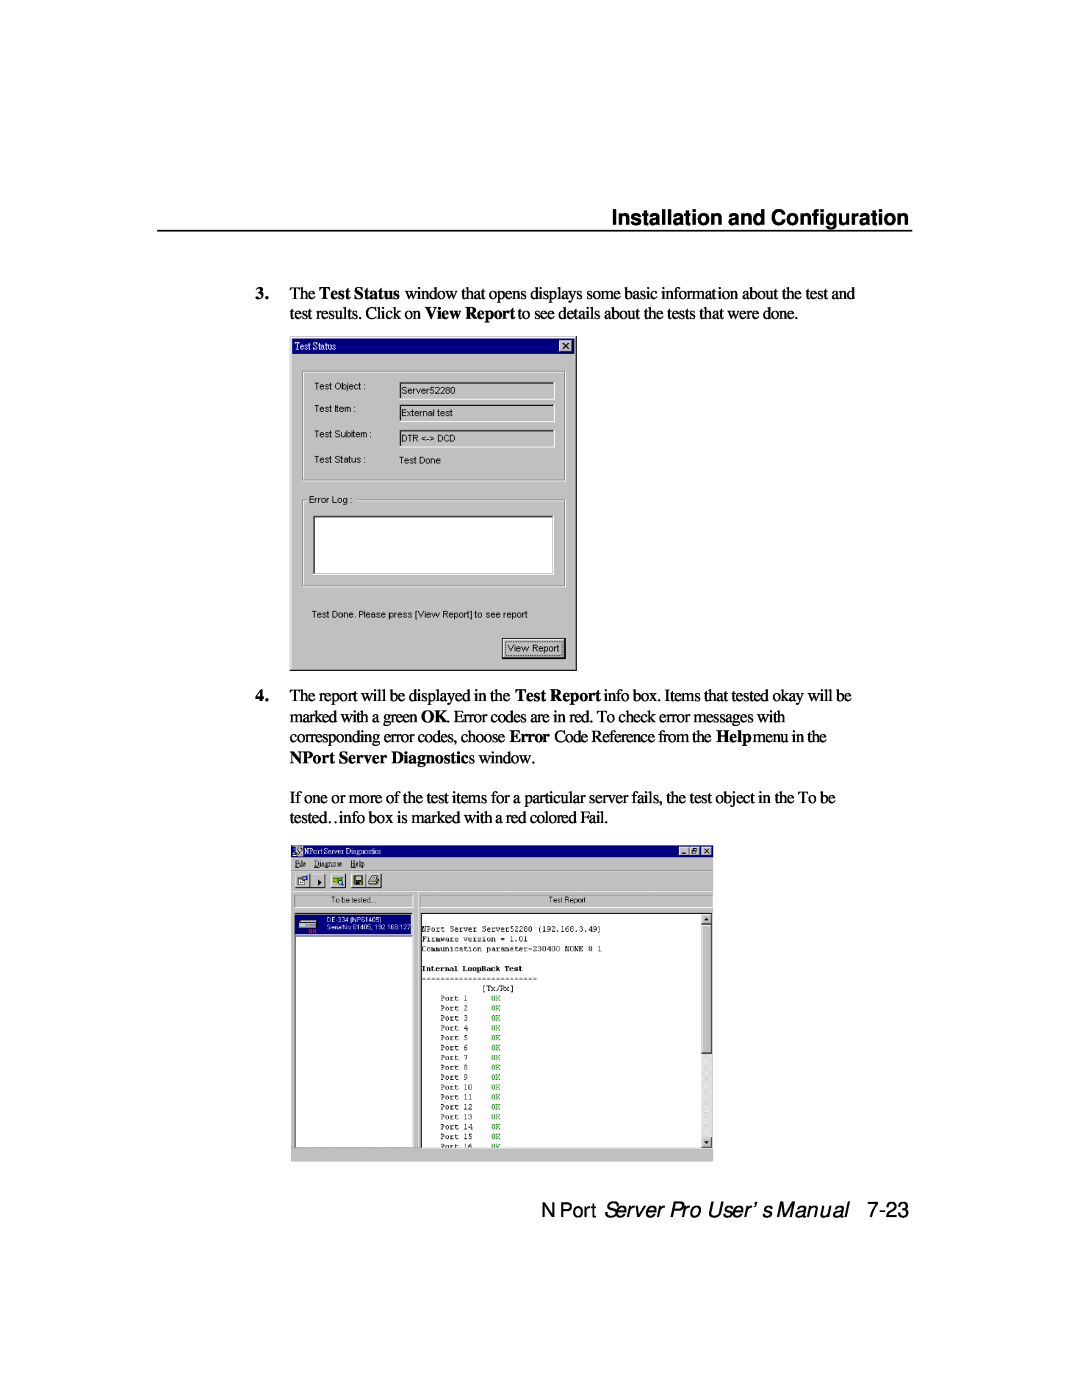 Moxa Technologies DE-308, DE-303 manual Installation and Configuration, NPort Server Pro User’s Manual 